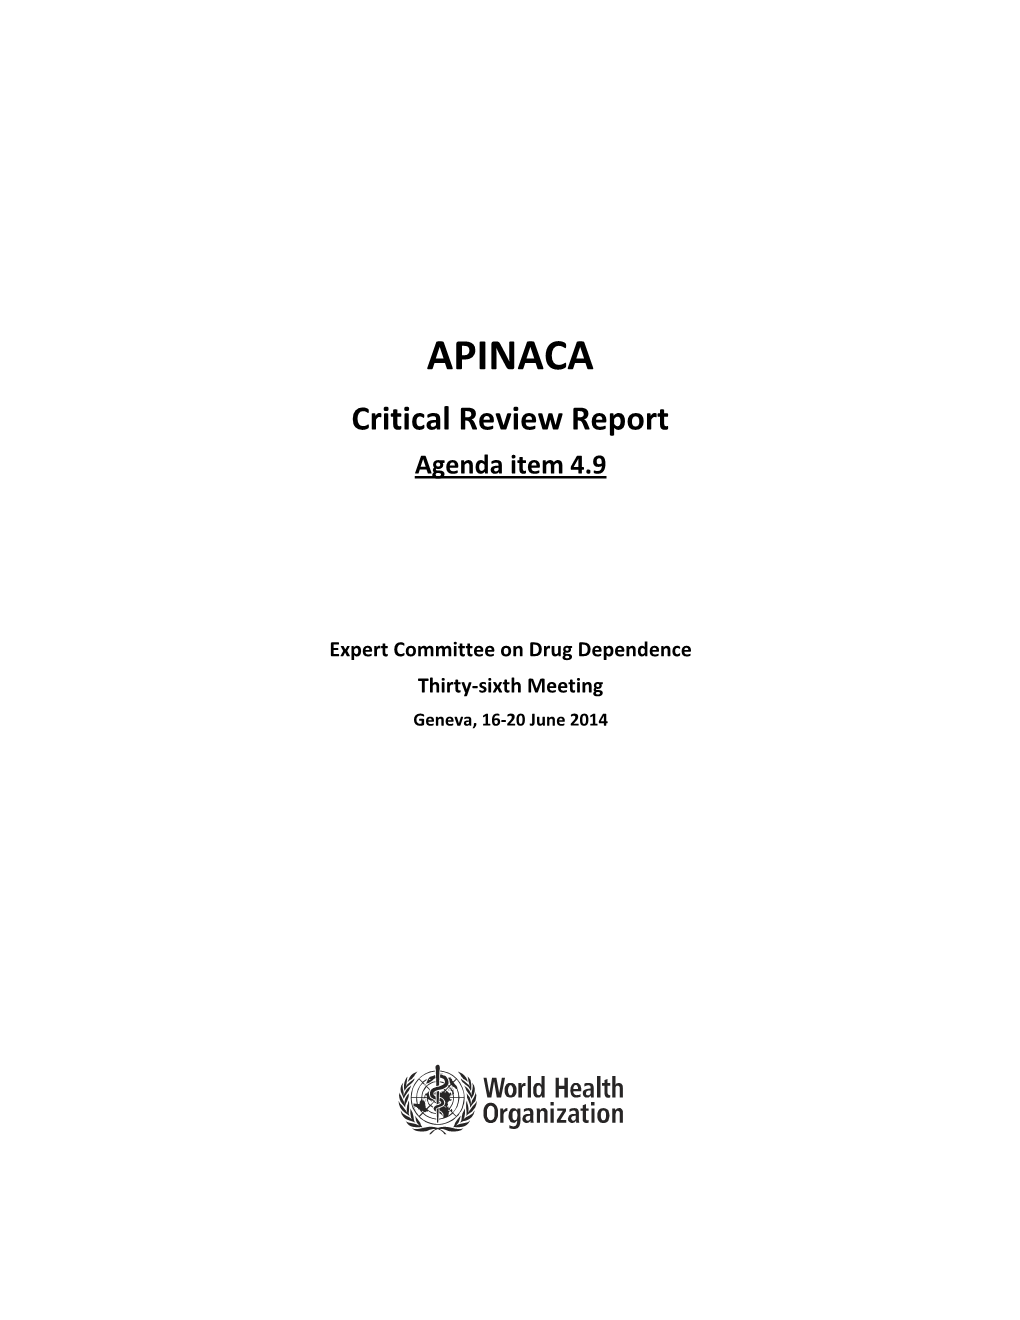 APINACA Critical Review Report Agenda Item 4.9